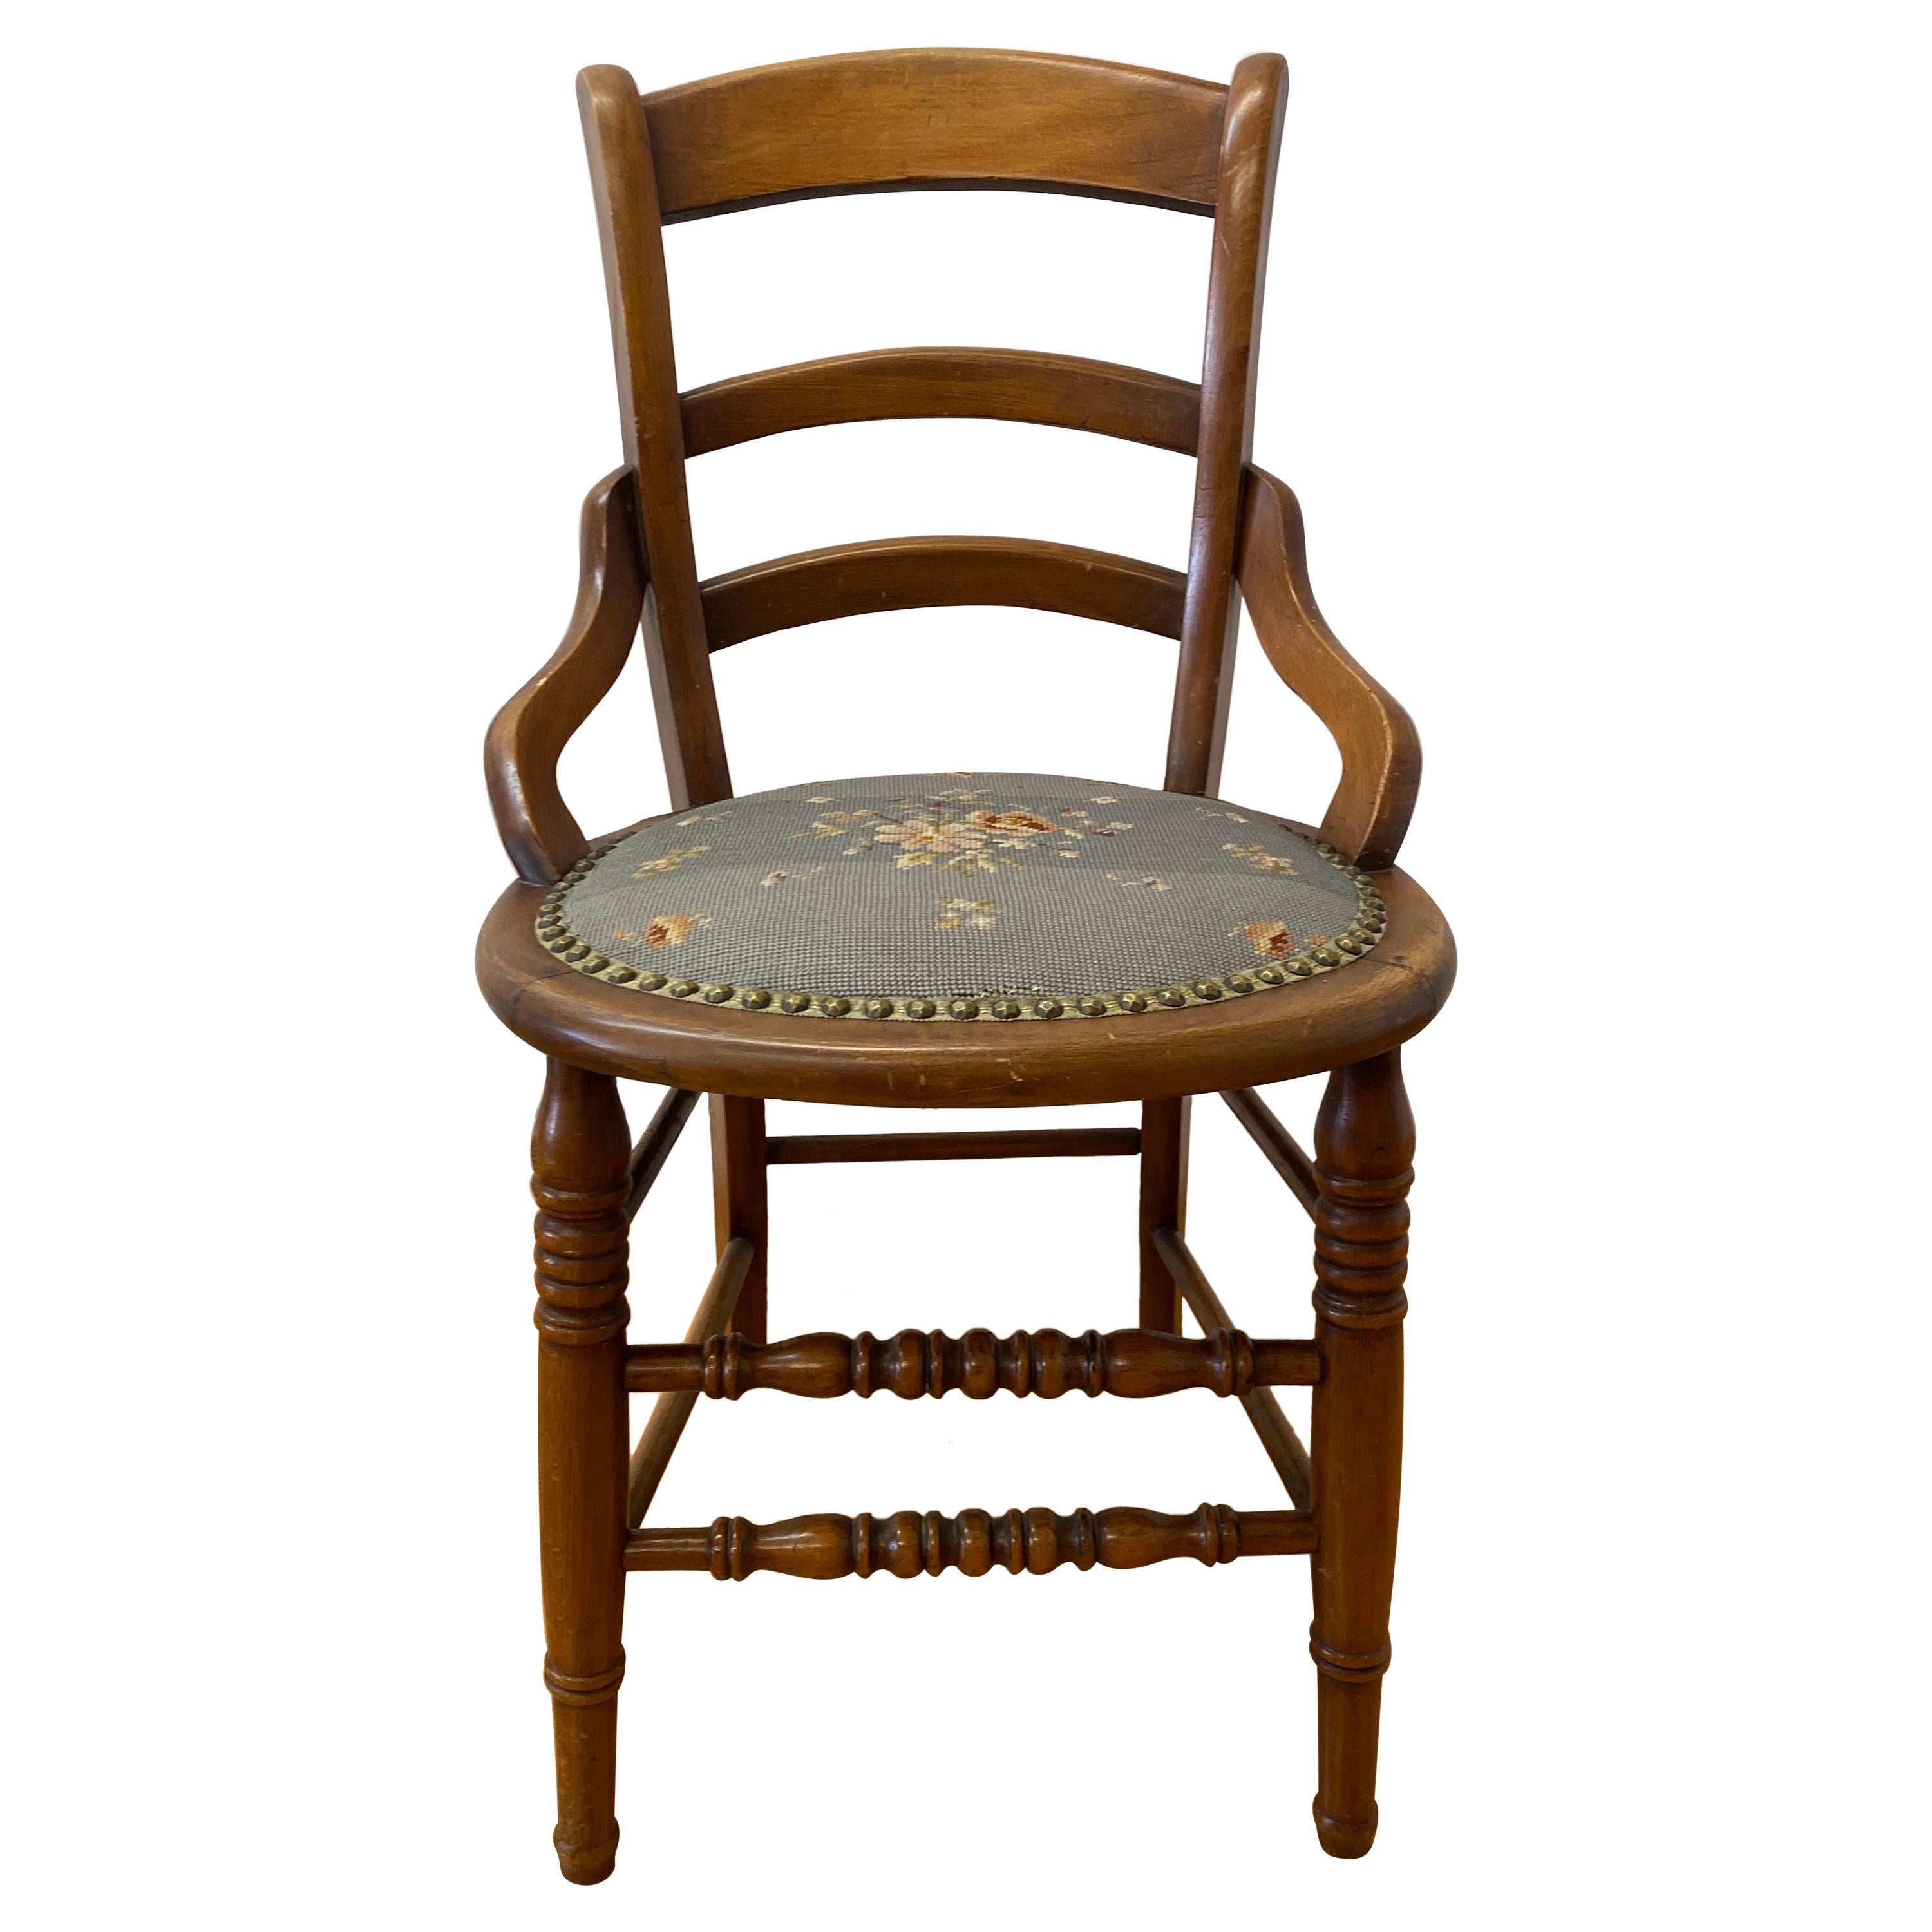 Mid 19th Century American Walnut Chair W/ Needlepoint Seat, C.1870